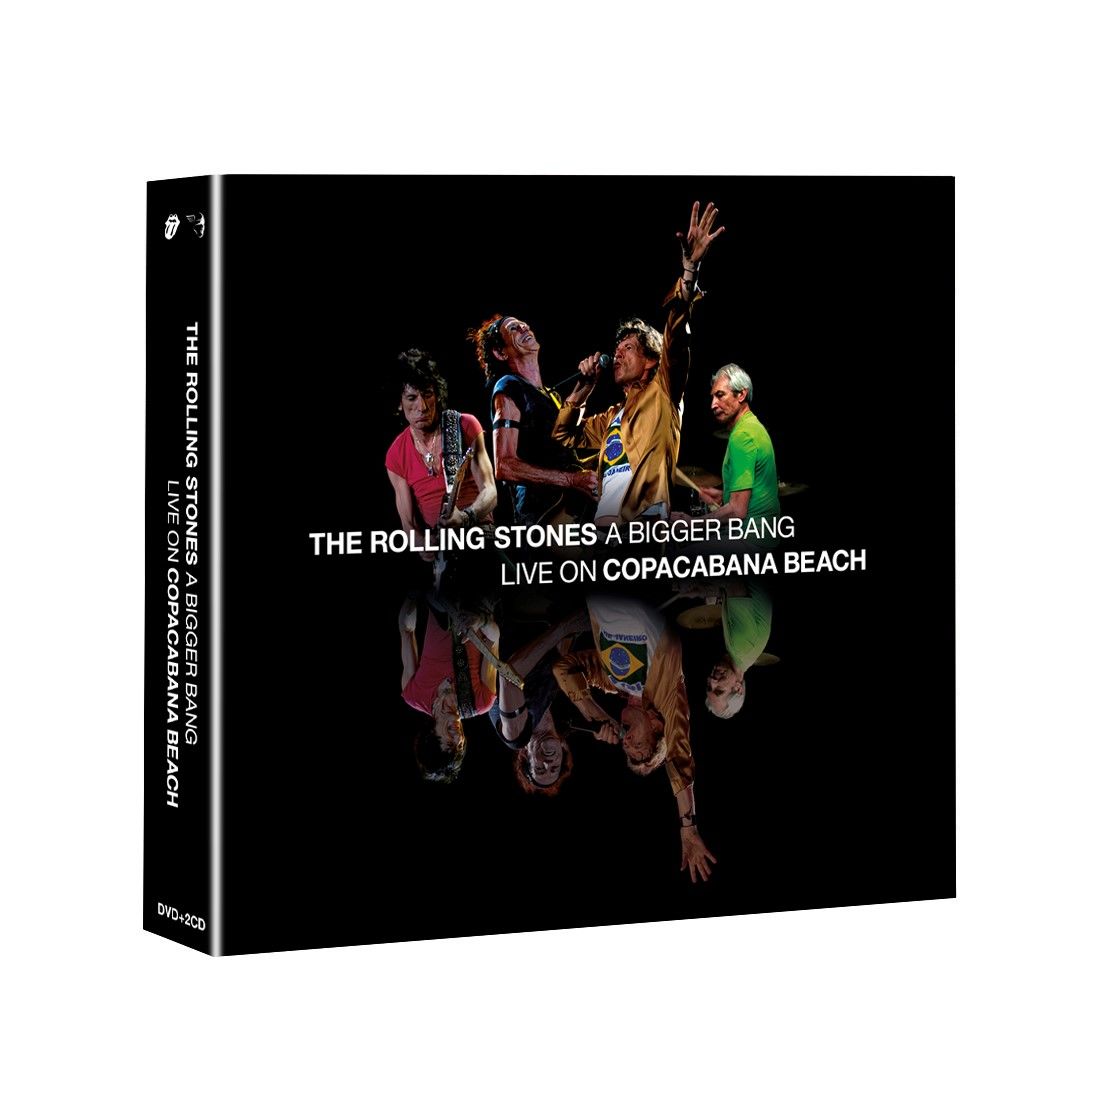 The Rolling Stones - ‘A Bigger Bang’ Live On Copacabana Beach: SD Blu-ray 4-disc Set